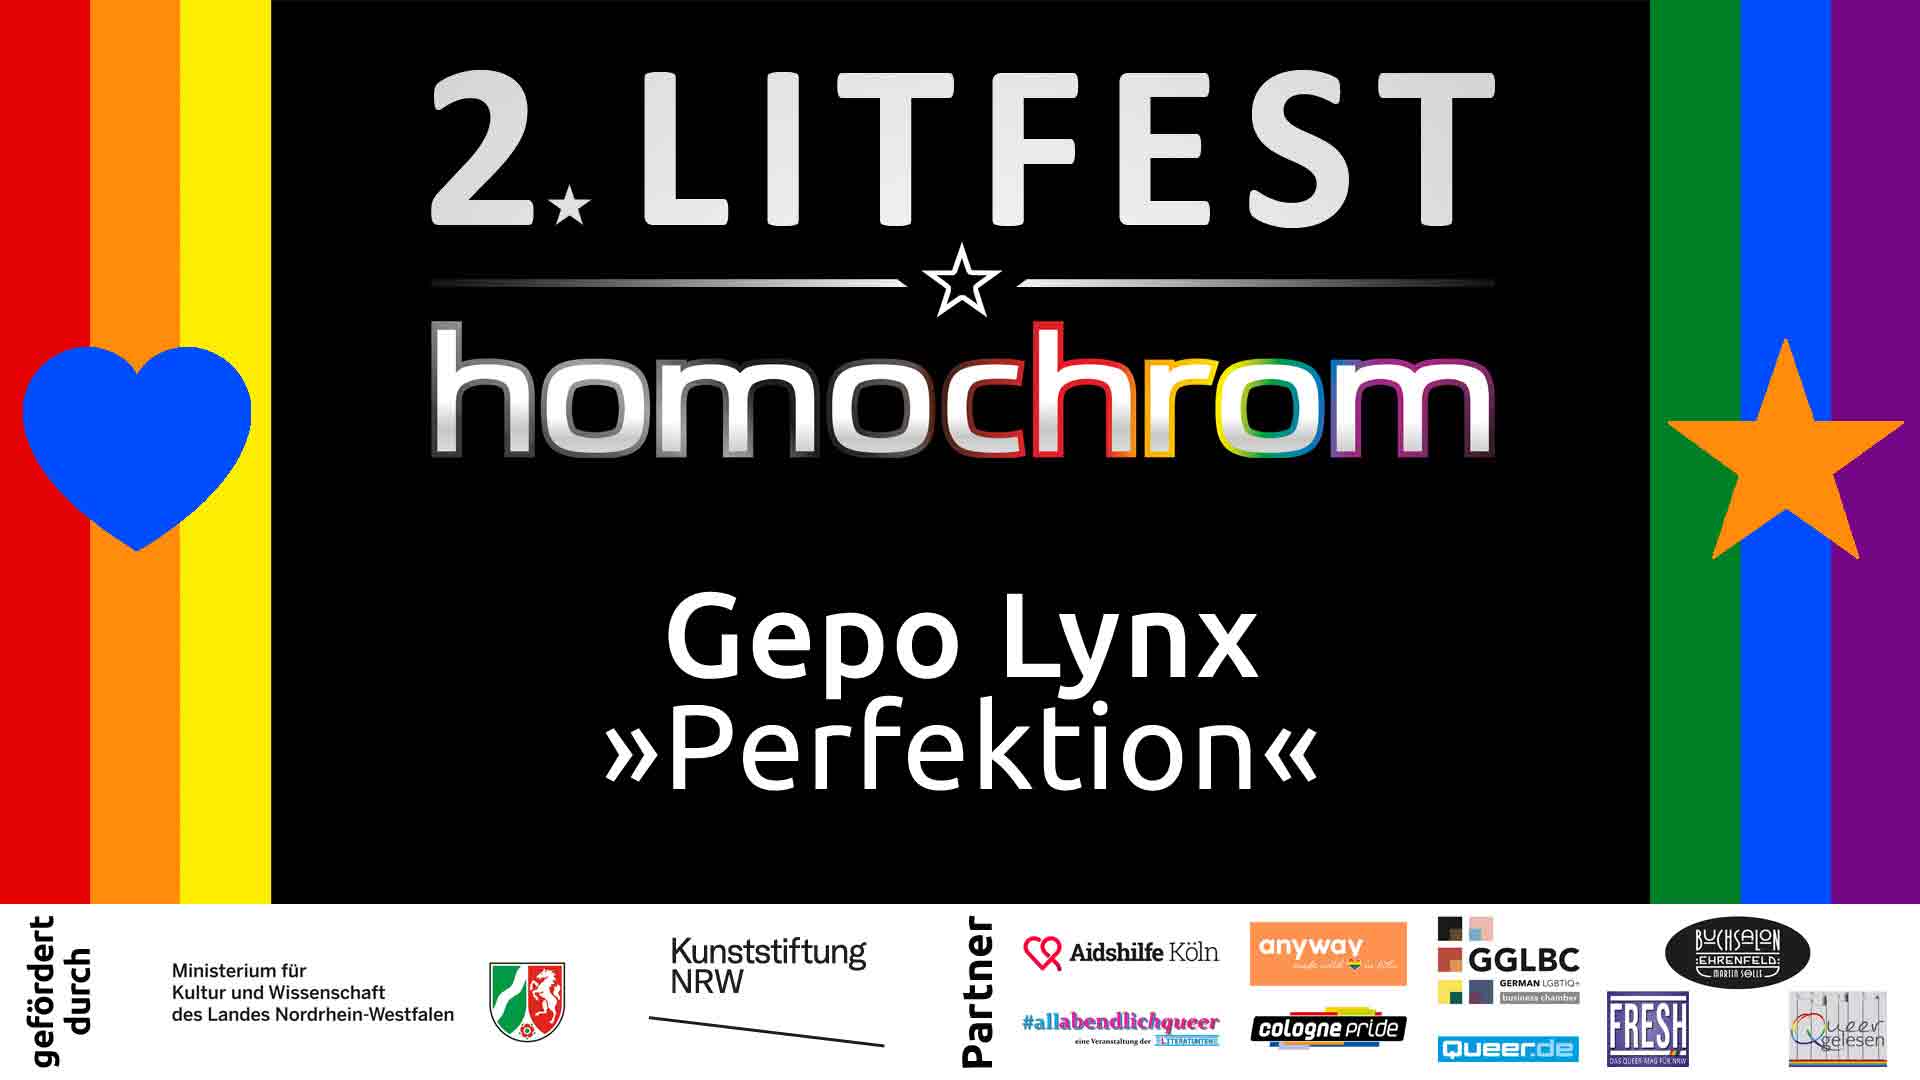 Youtube Video, Gepo Lynx, 2. Litfest homochrom